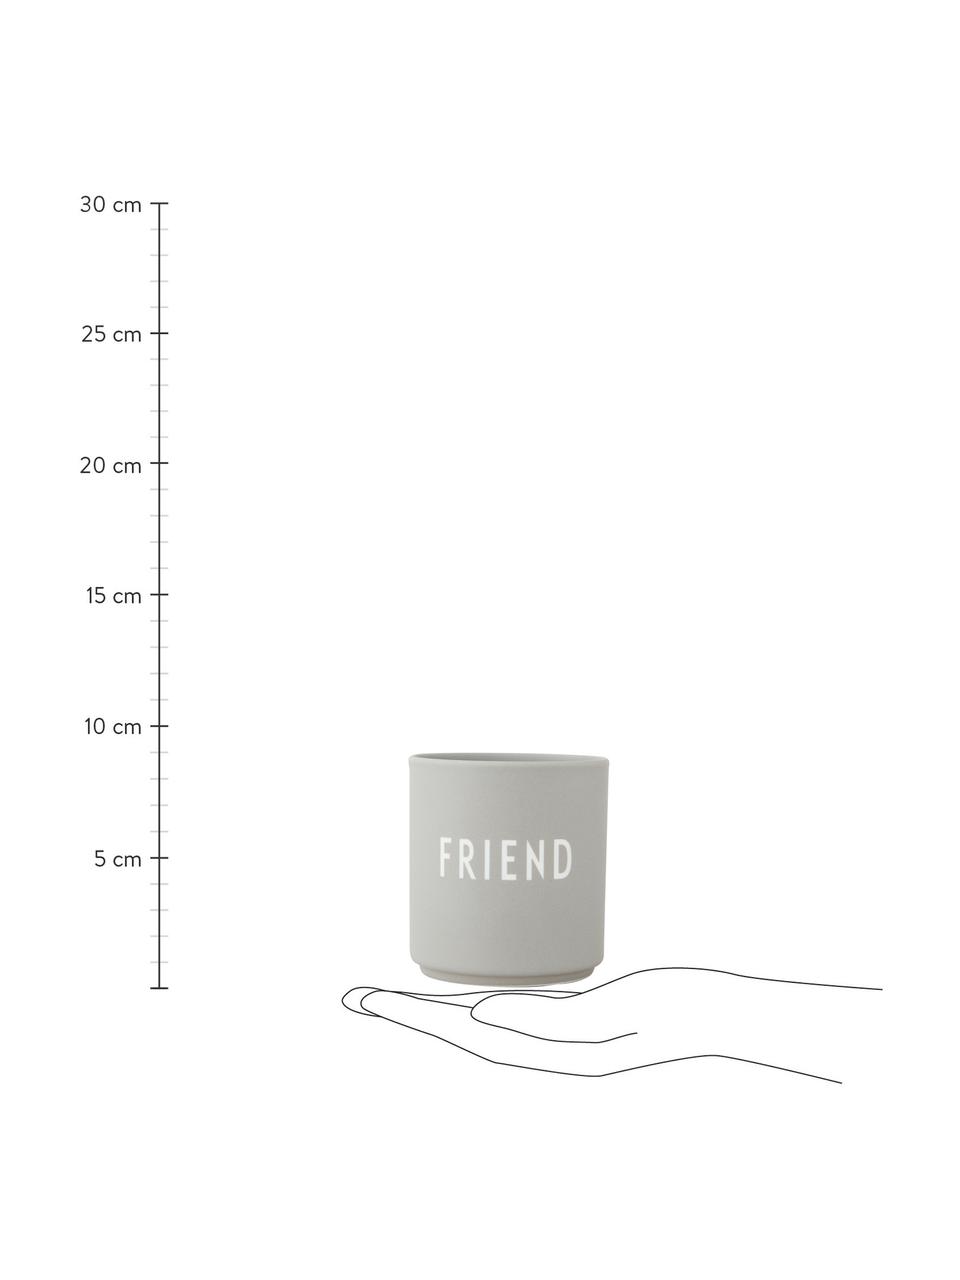 Mug design gris Favorite FRIEND, Gris clair, blanc